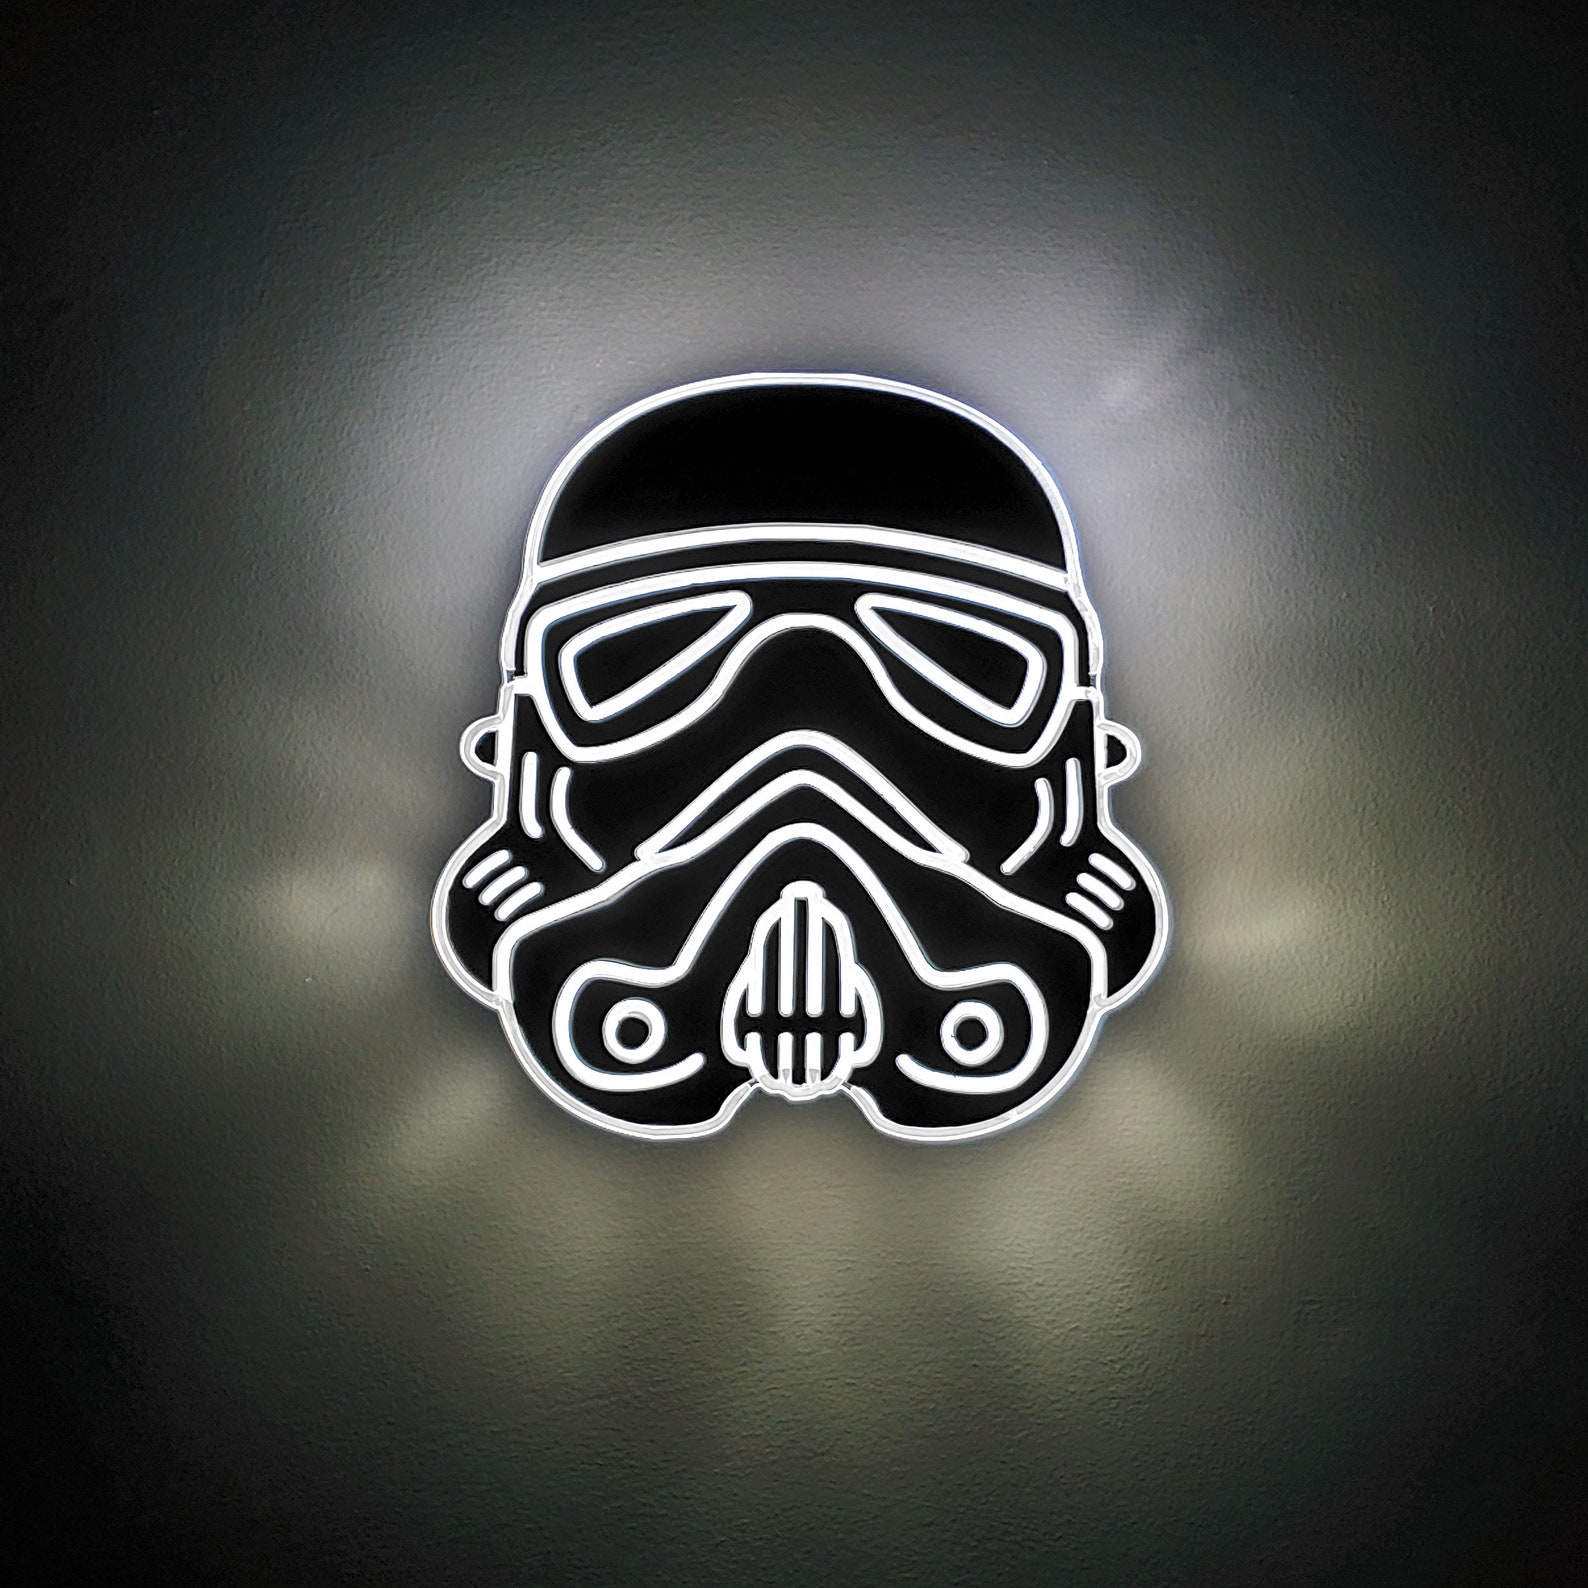 SW Imperial Stormtrooper Helmet Neon LED Light Wall Decor Sign 2